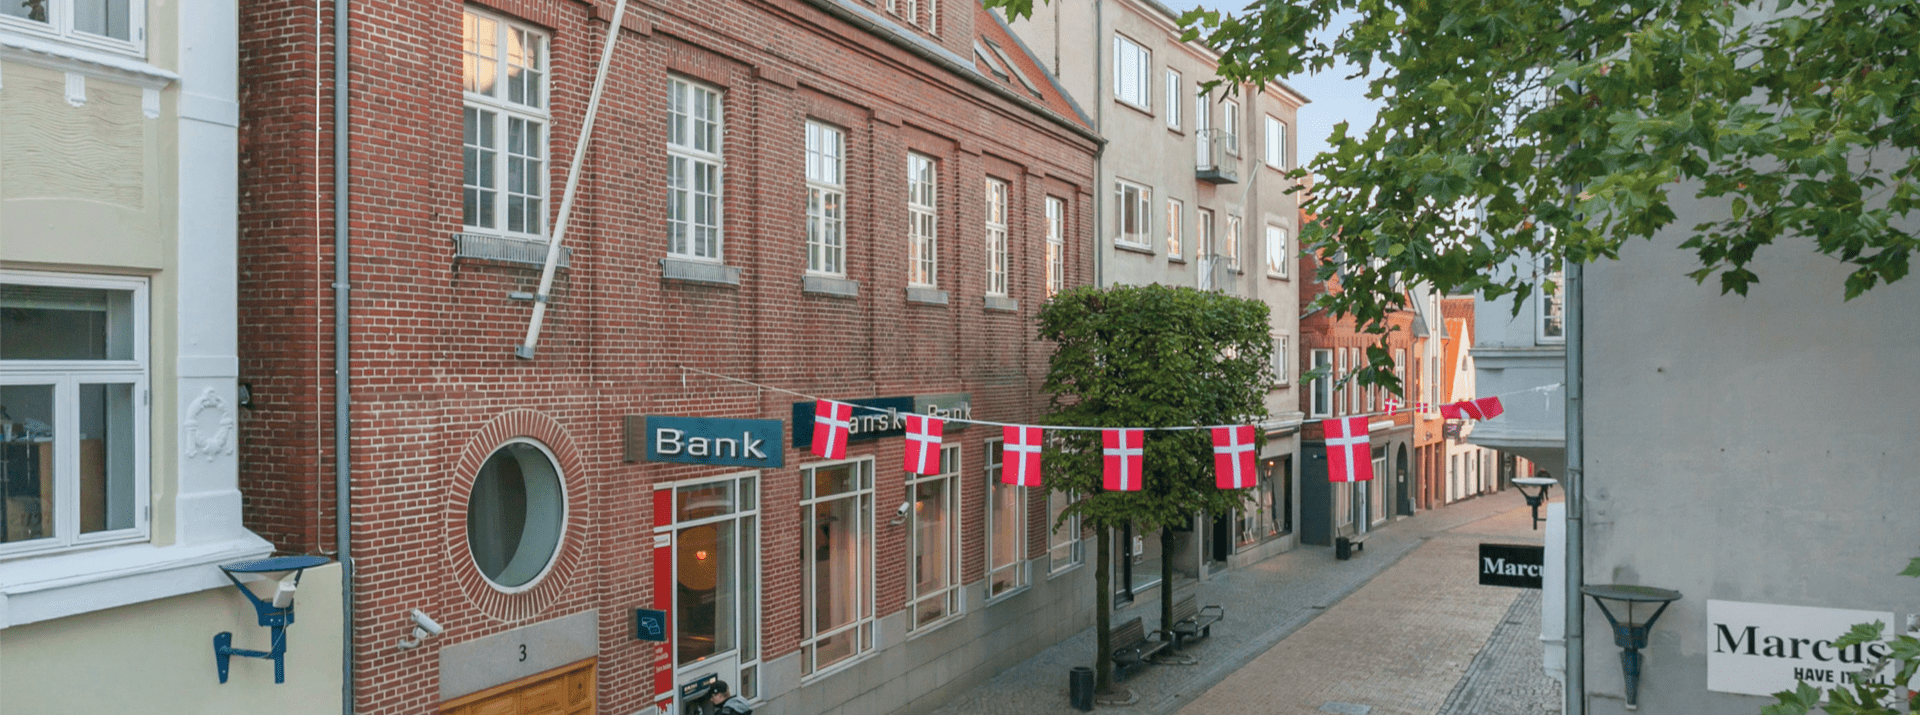 Danish Bank